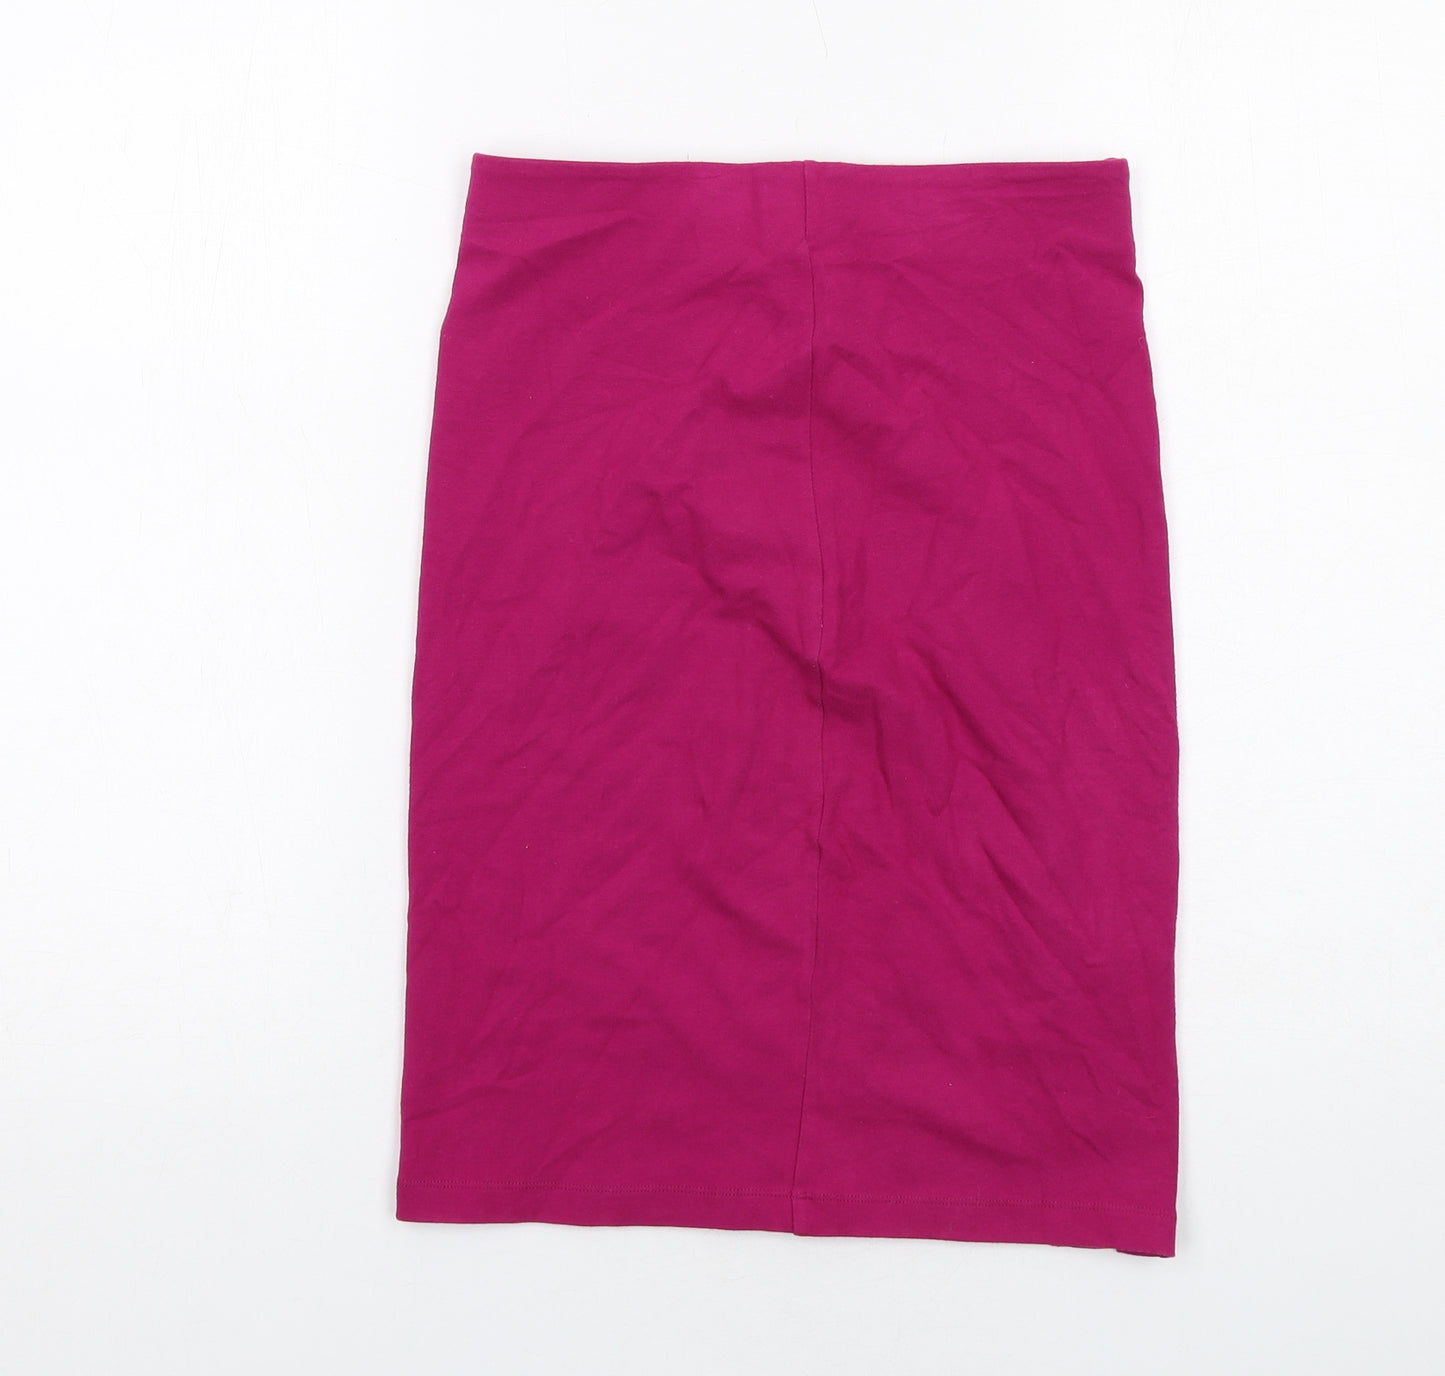 Uniqlo Womens Pink Cotton Straight & Pencil Skirt Size XS